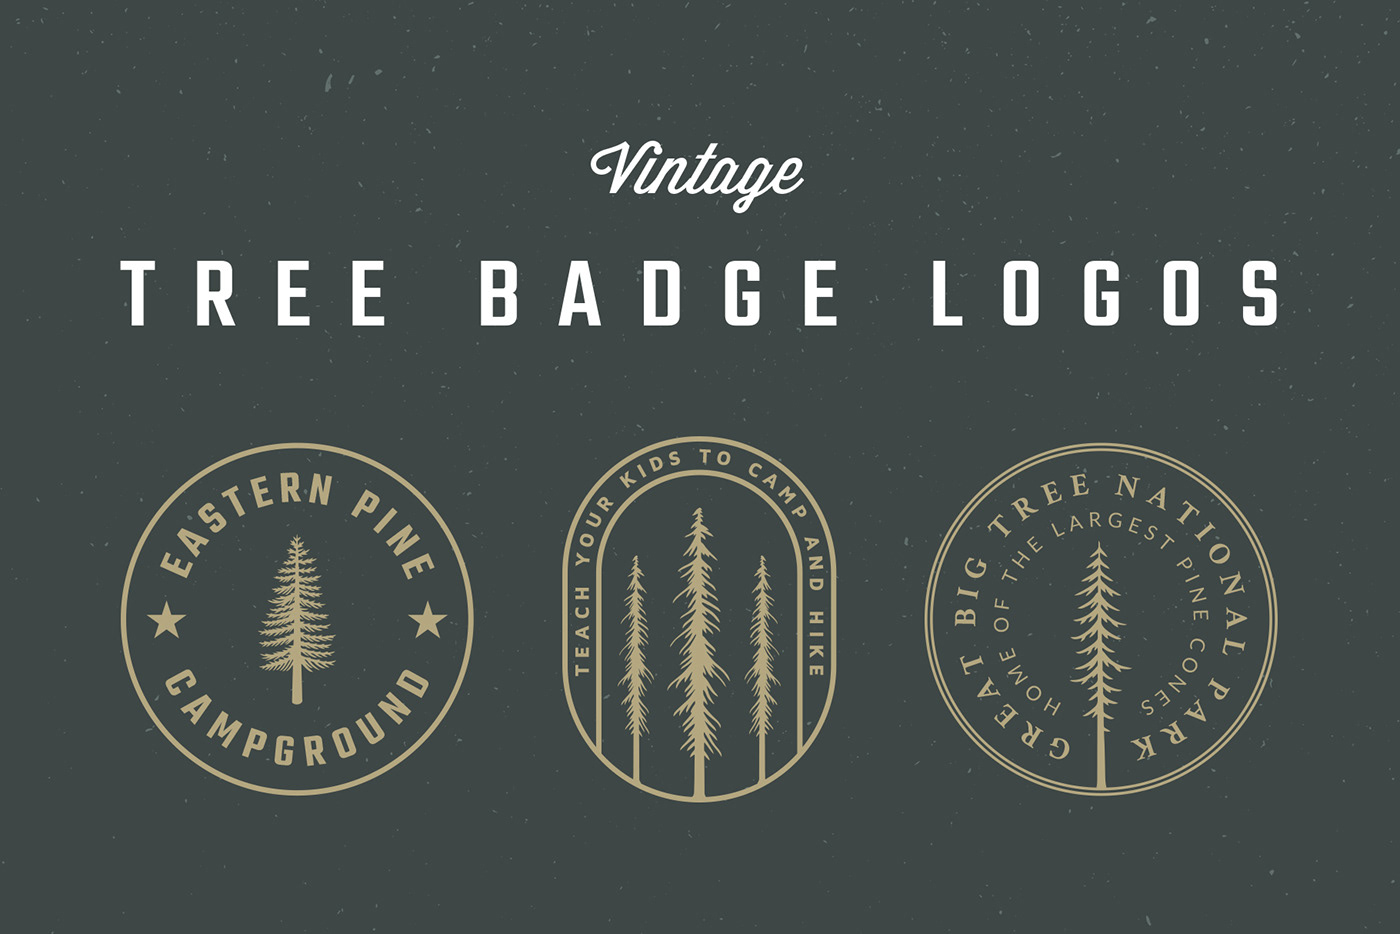 trees badge logos Nature outdoors National Park Travel rustic handmade handdrawn